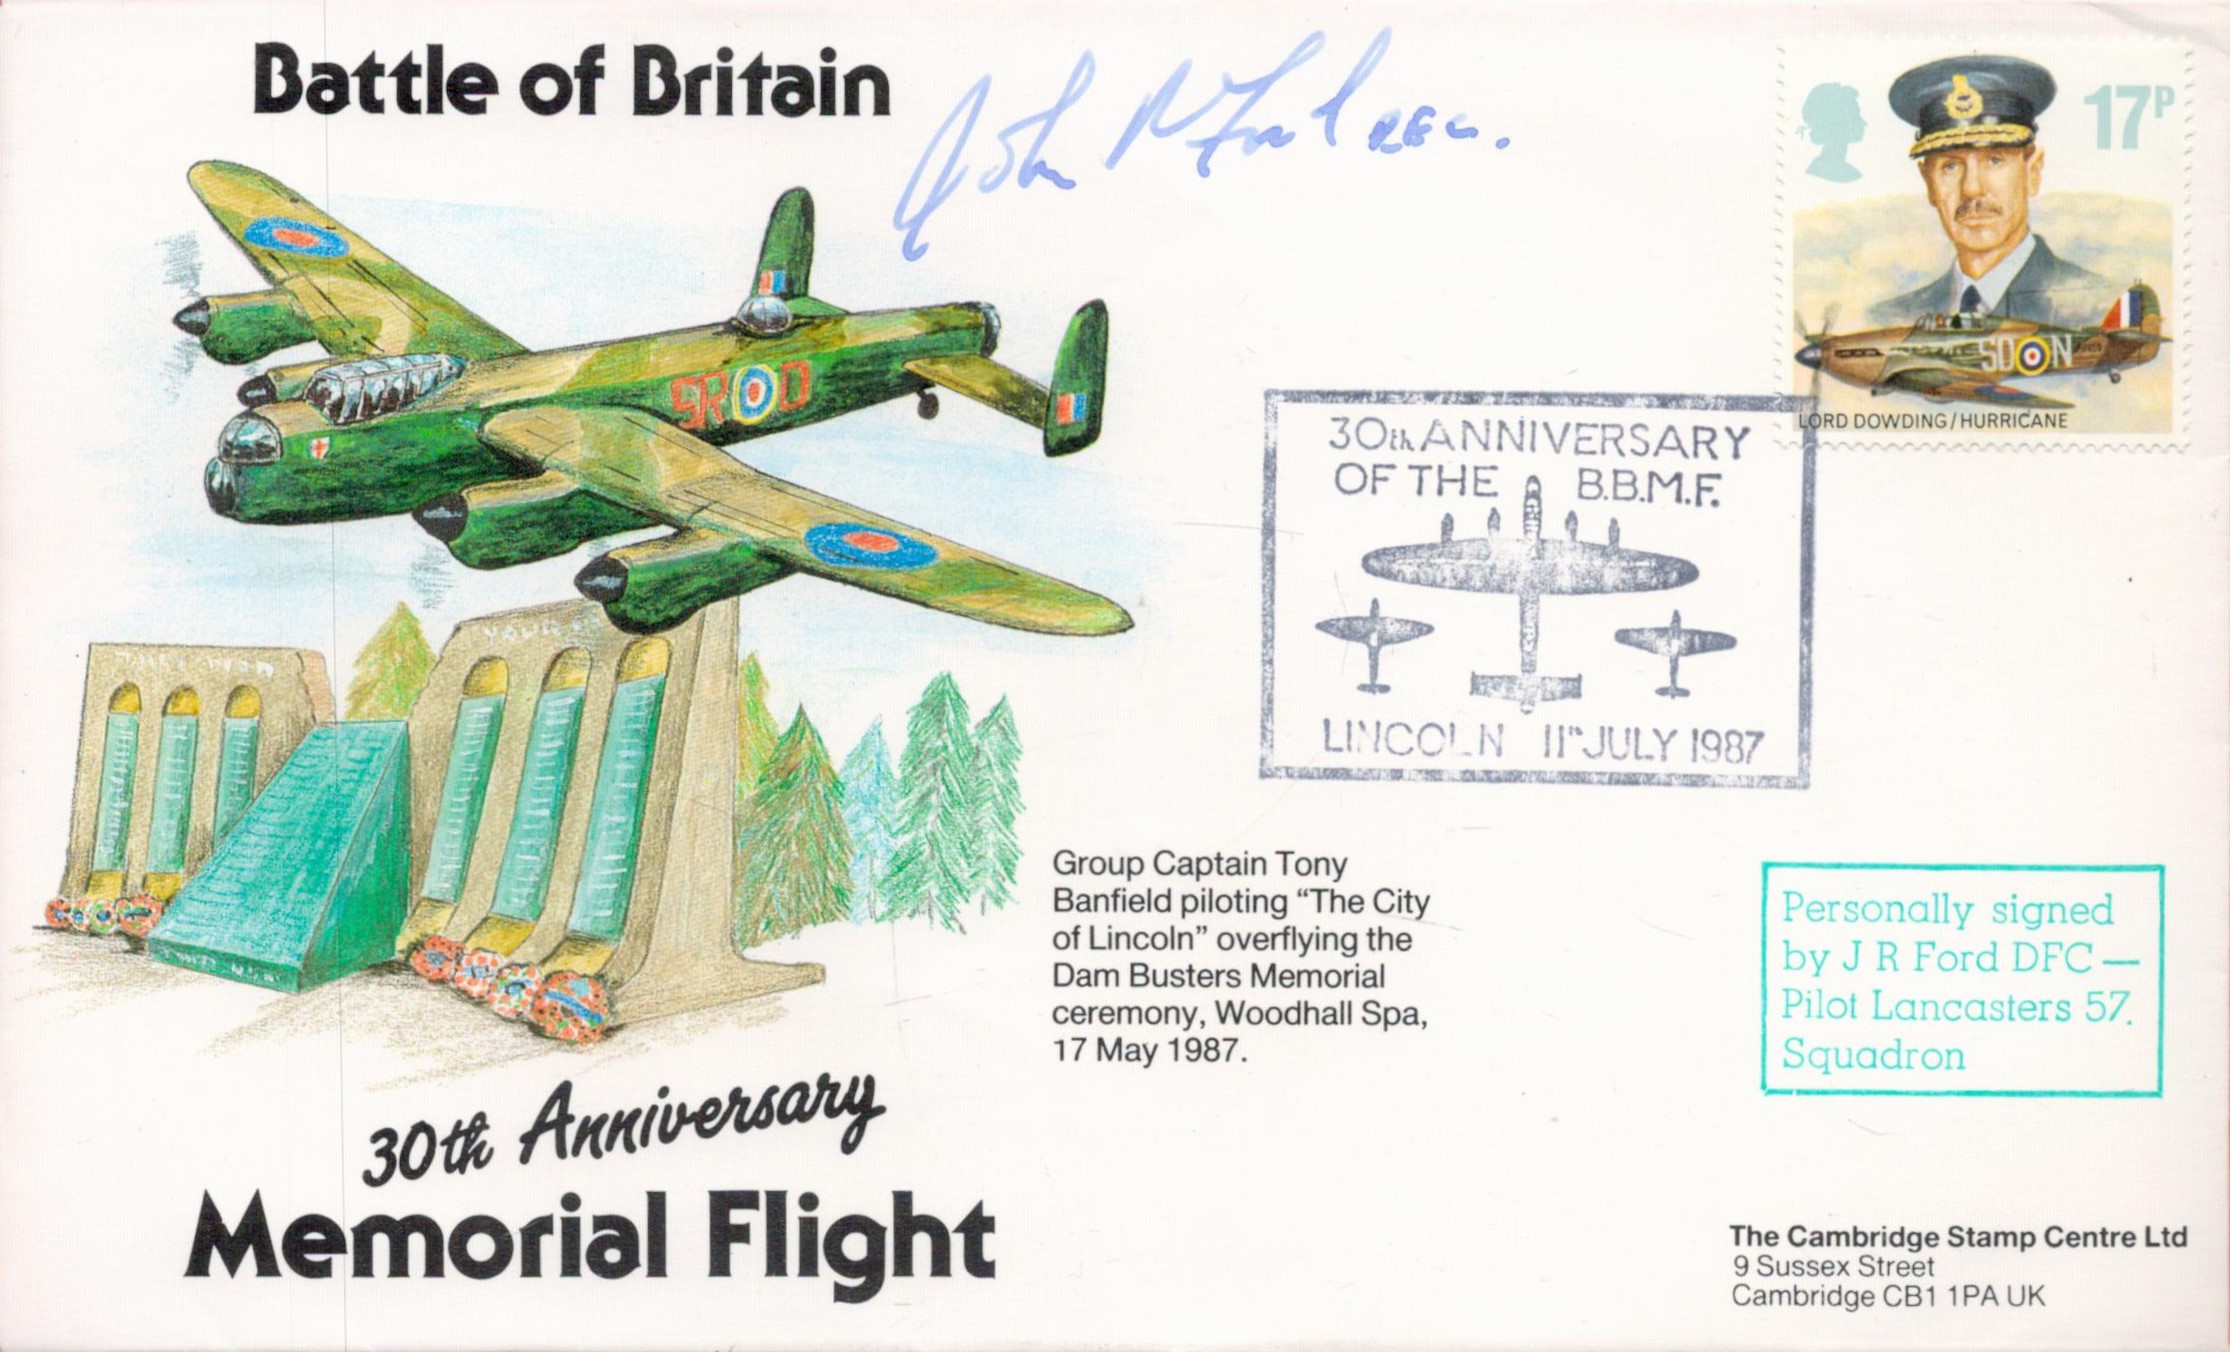 John R Ford DFC (57th Squadron) Signed Battle of Britain 30th Anniversary Memorial Flight. British